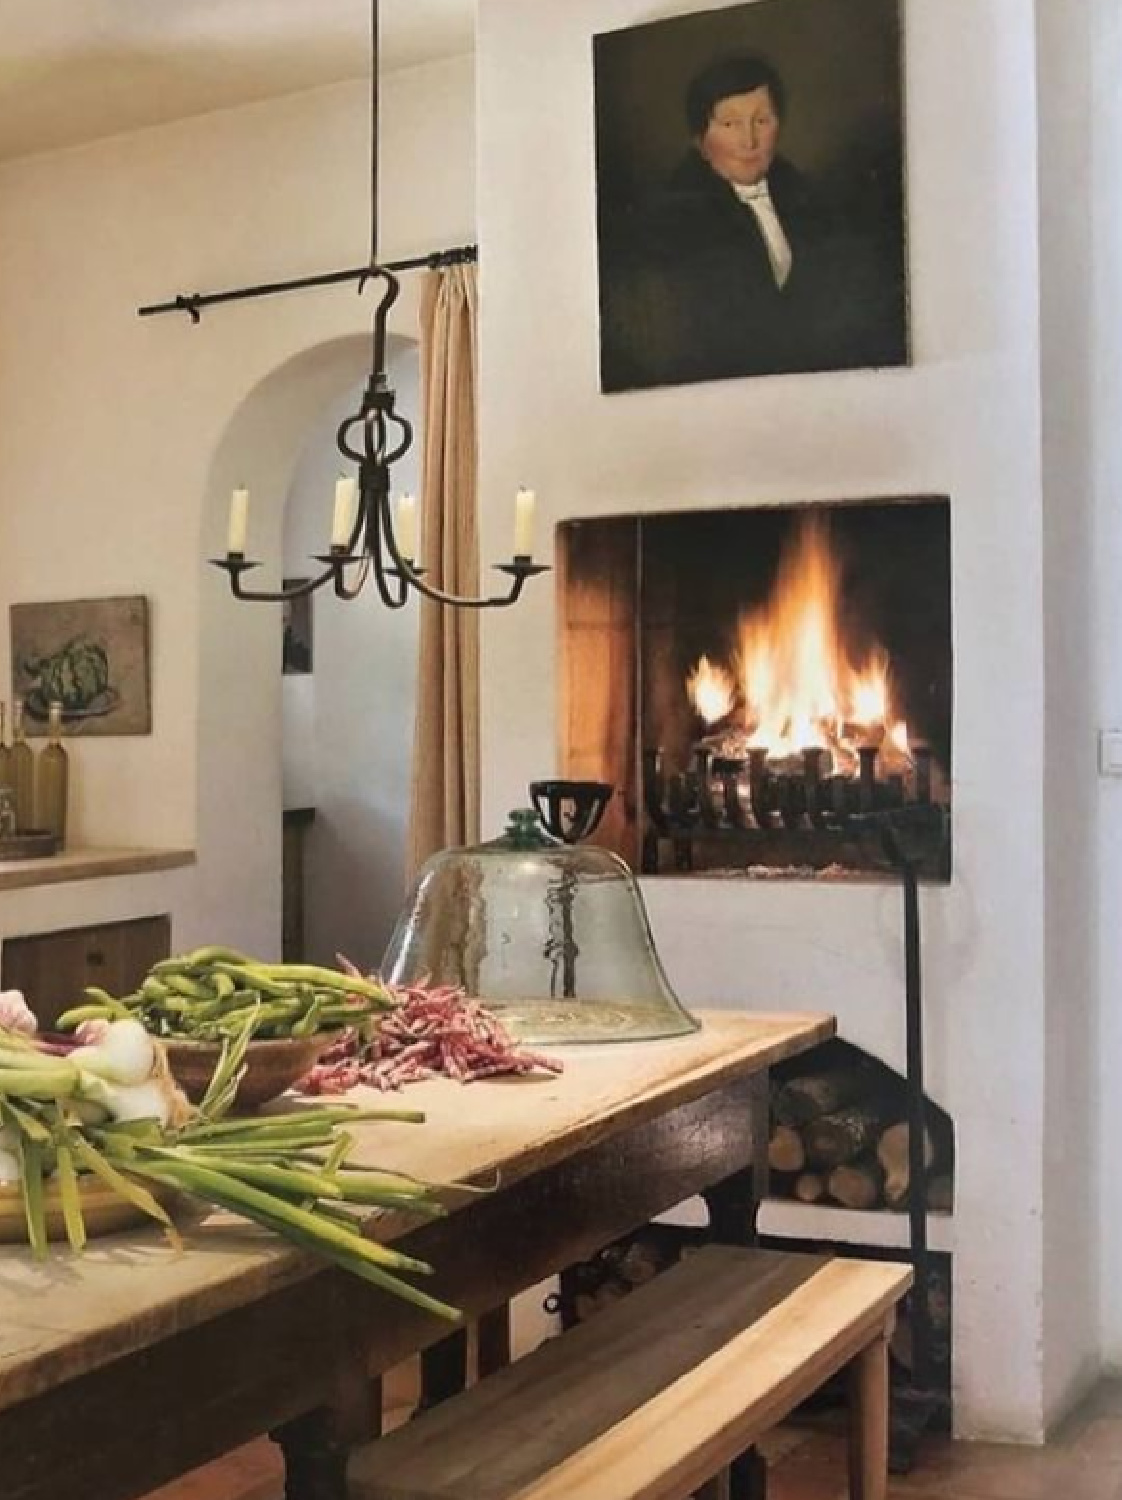 Cozy fireplace in Old World style kitchen - via @aquietlifeathome. #kitchenfireplace